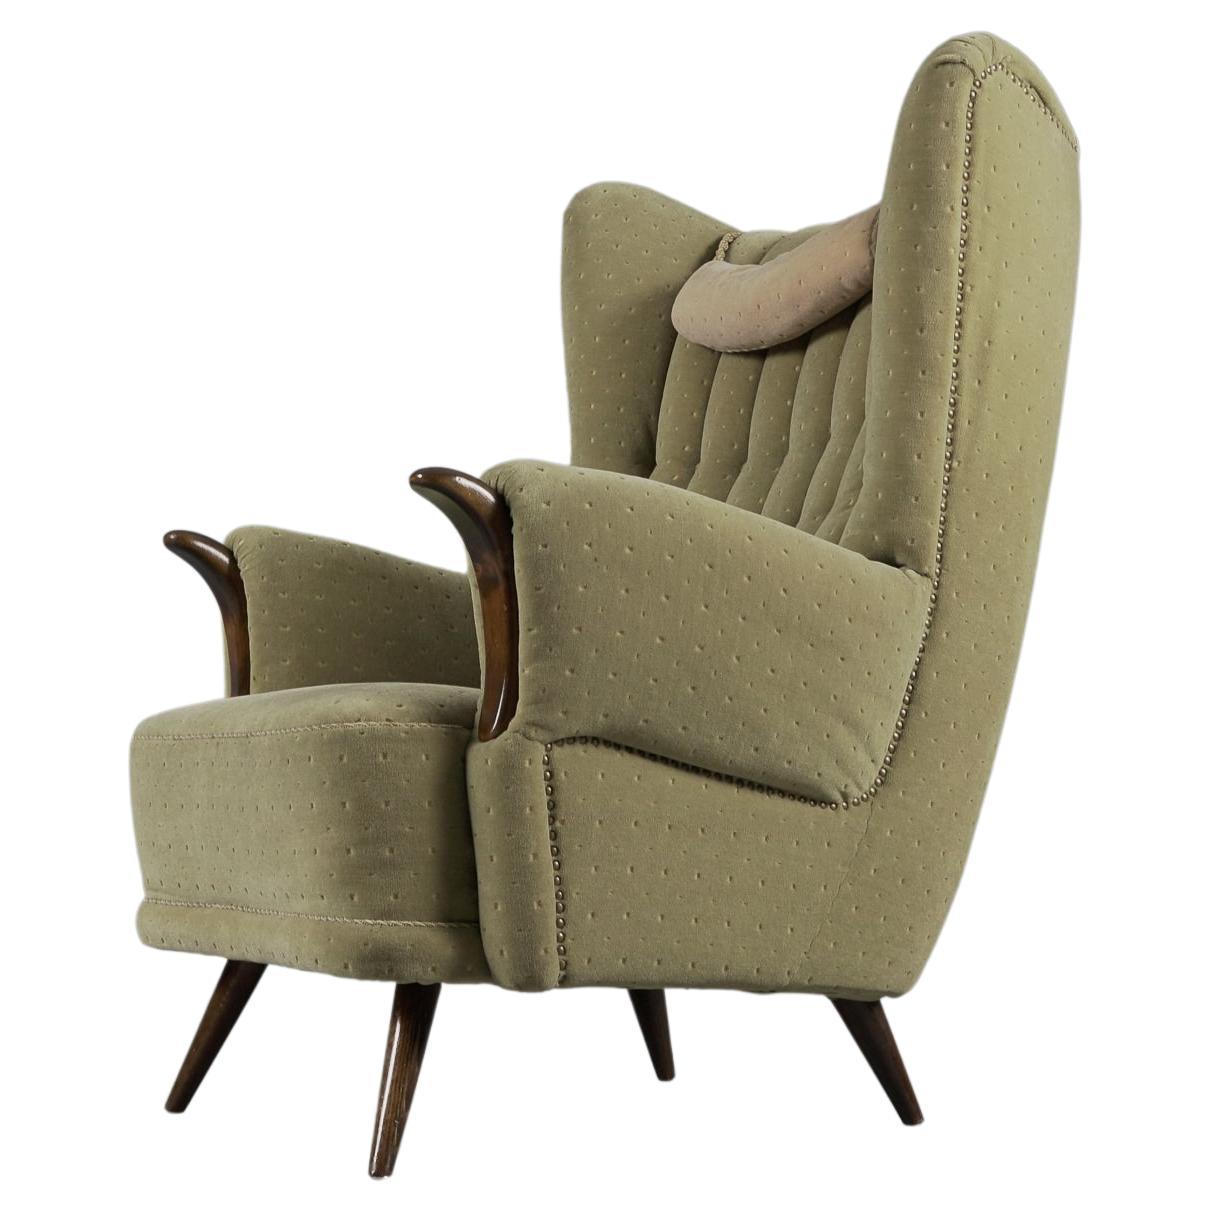 Large Green Italian Wood & Fabric Wingback Armchair, 1950s